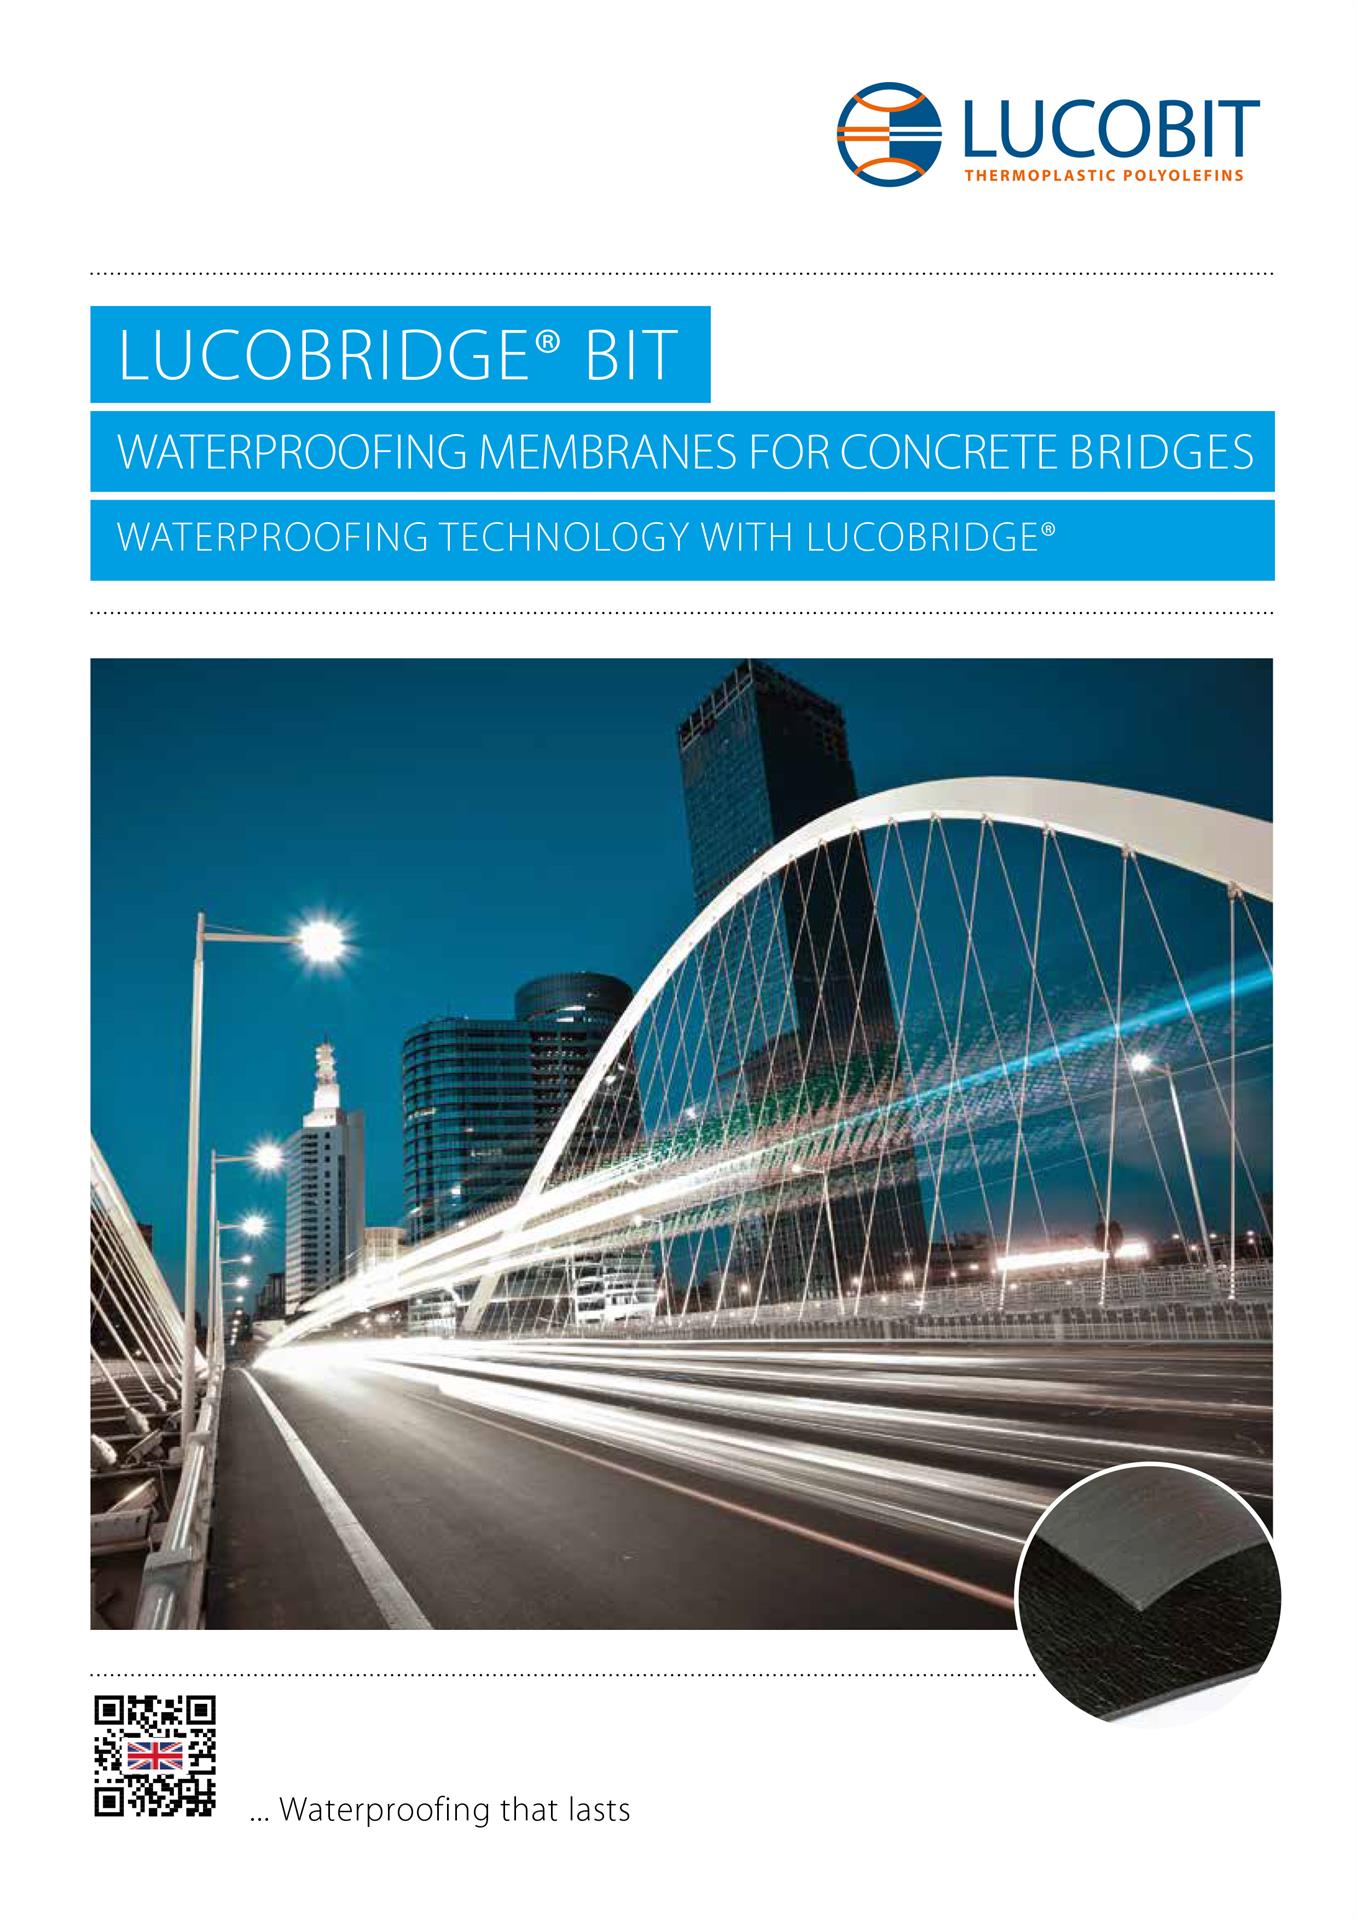 LUCOBIT Broschüre - WATERPROOFING MEMBRANES FOR CONCRETE BRIDGES